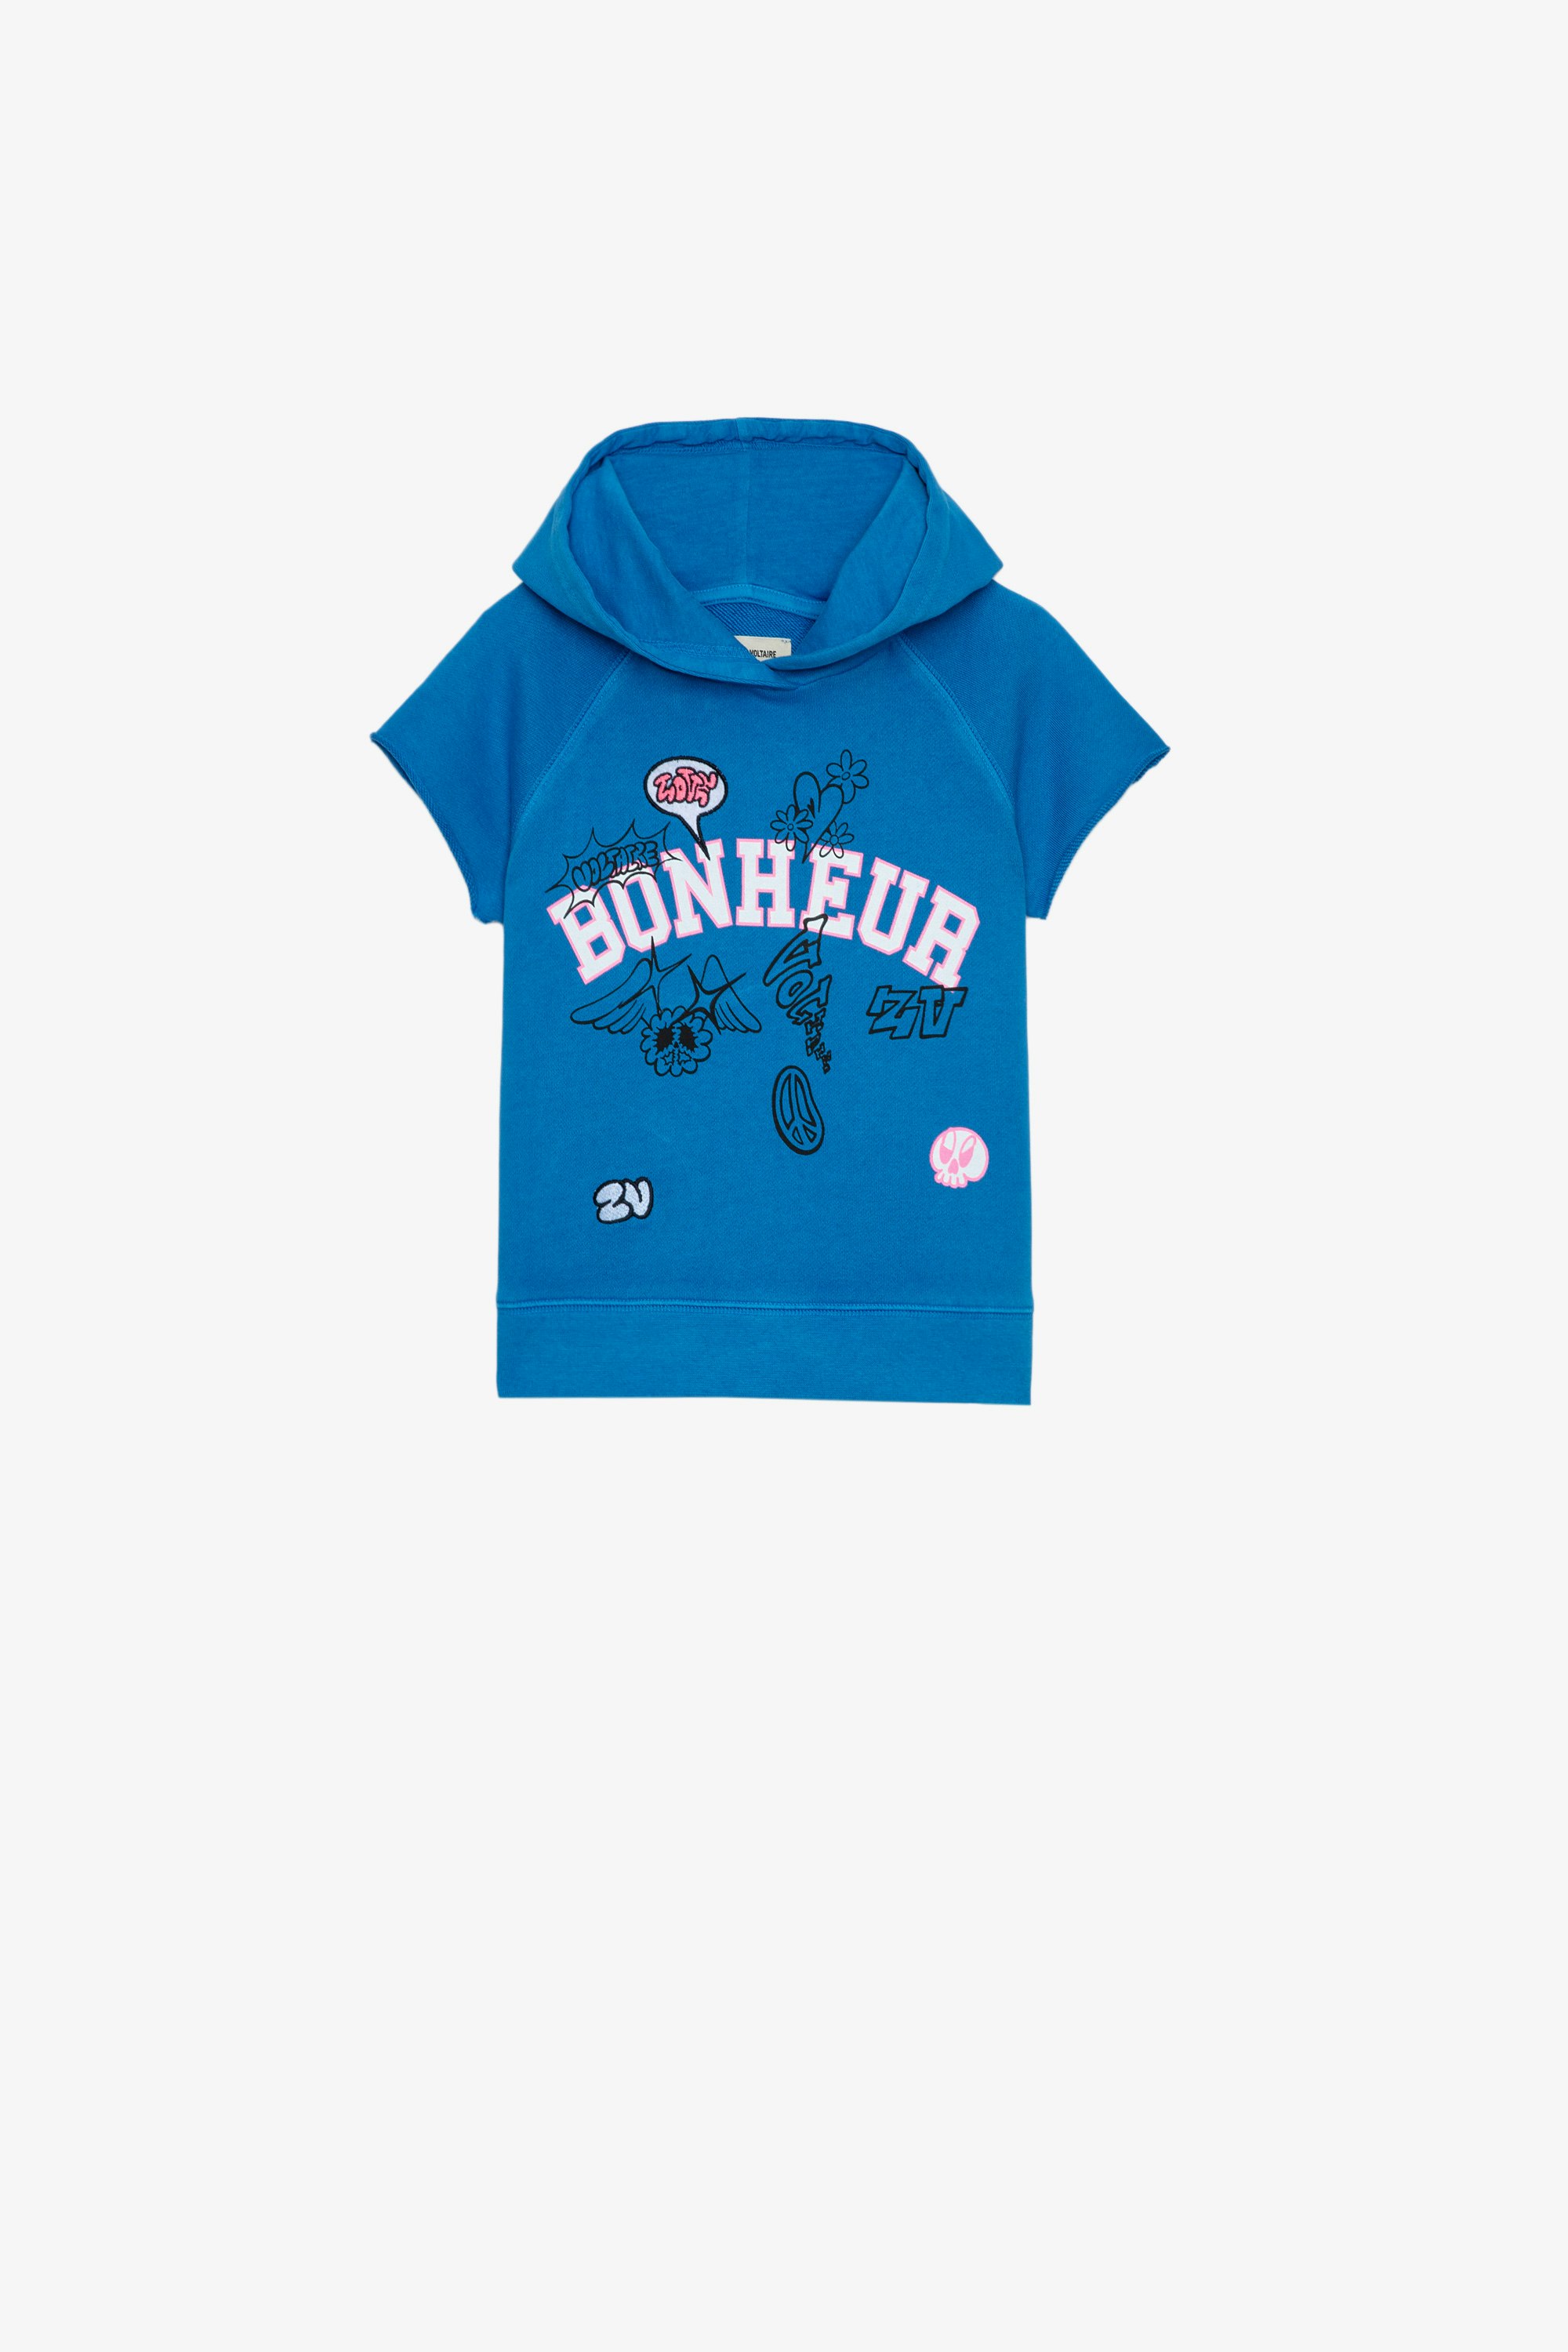 Gorgia Kids' Sweatshirt Kids’ sleeveless hoodie in blue cotton with a “Bonheur” slogan and embroidery